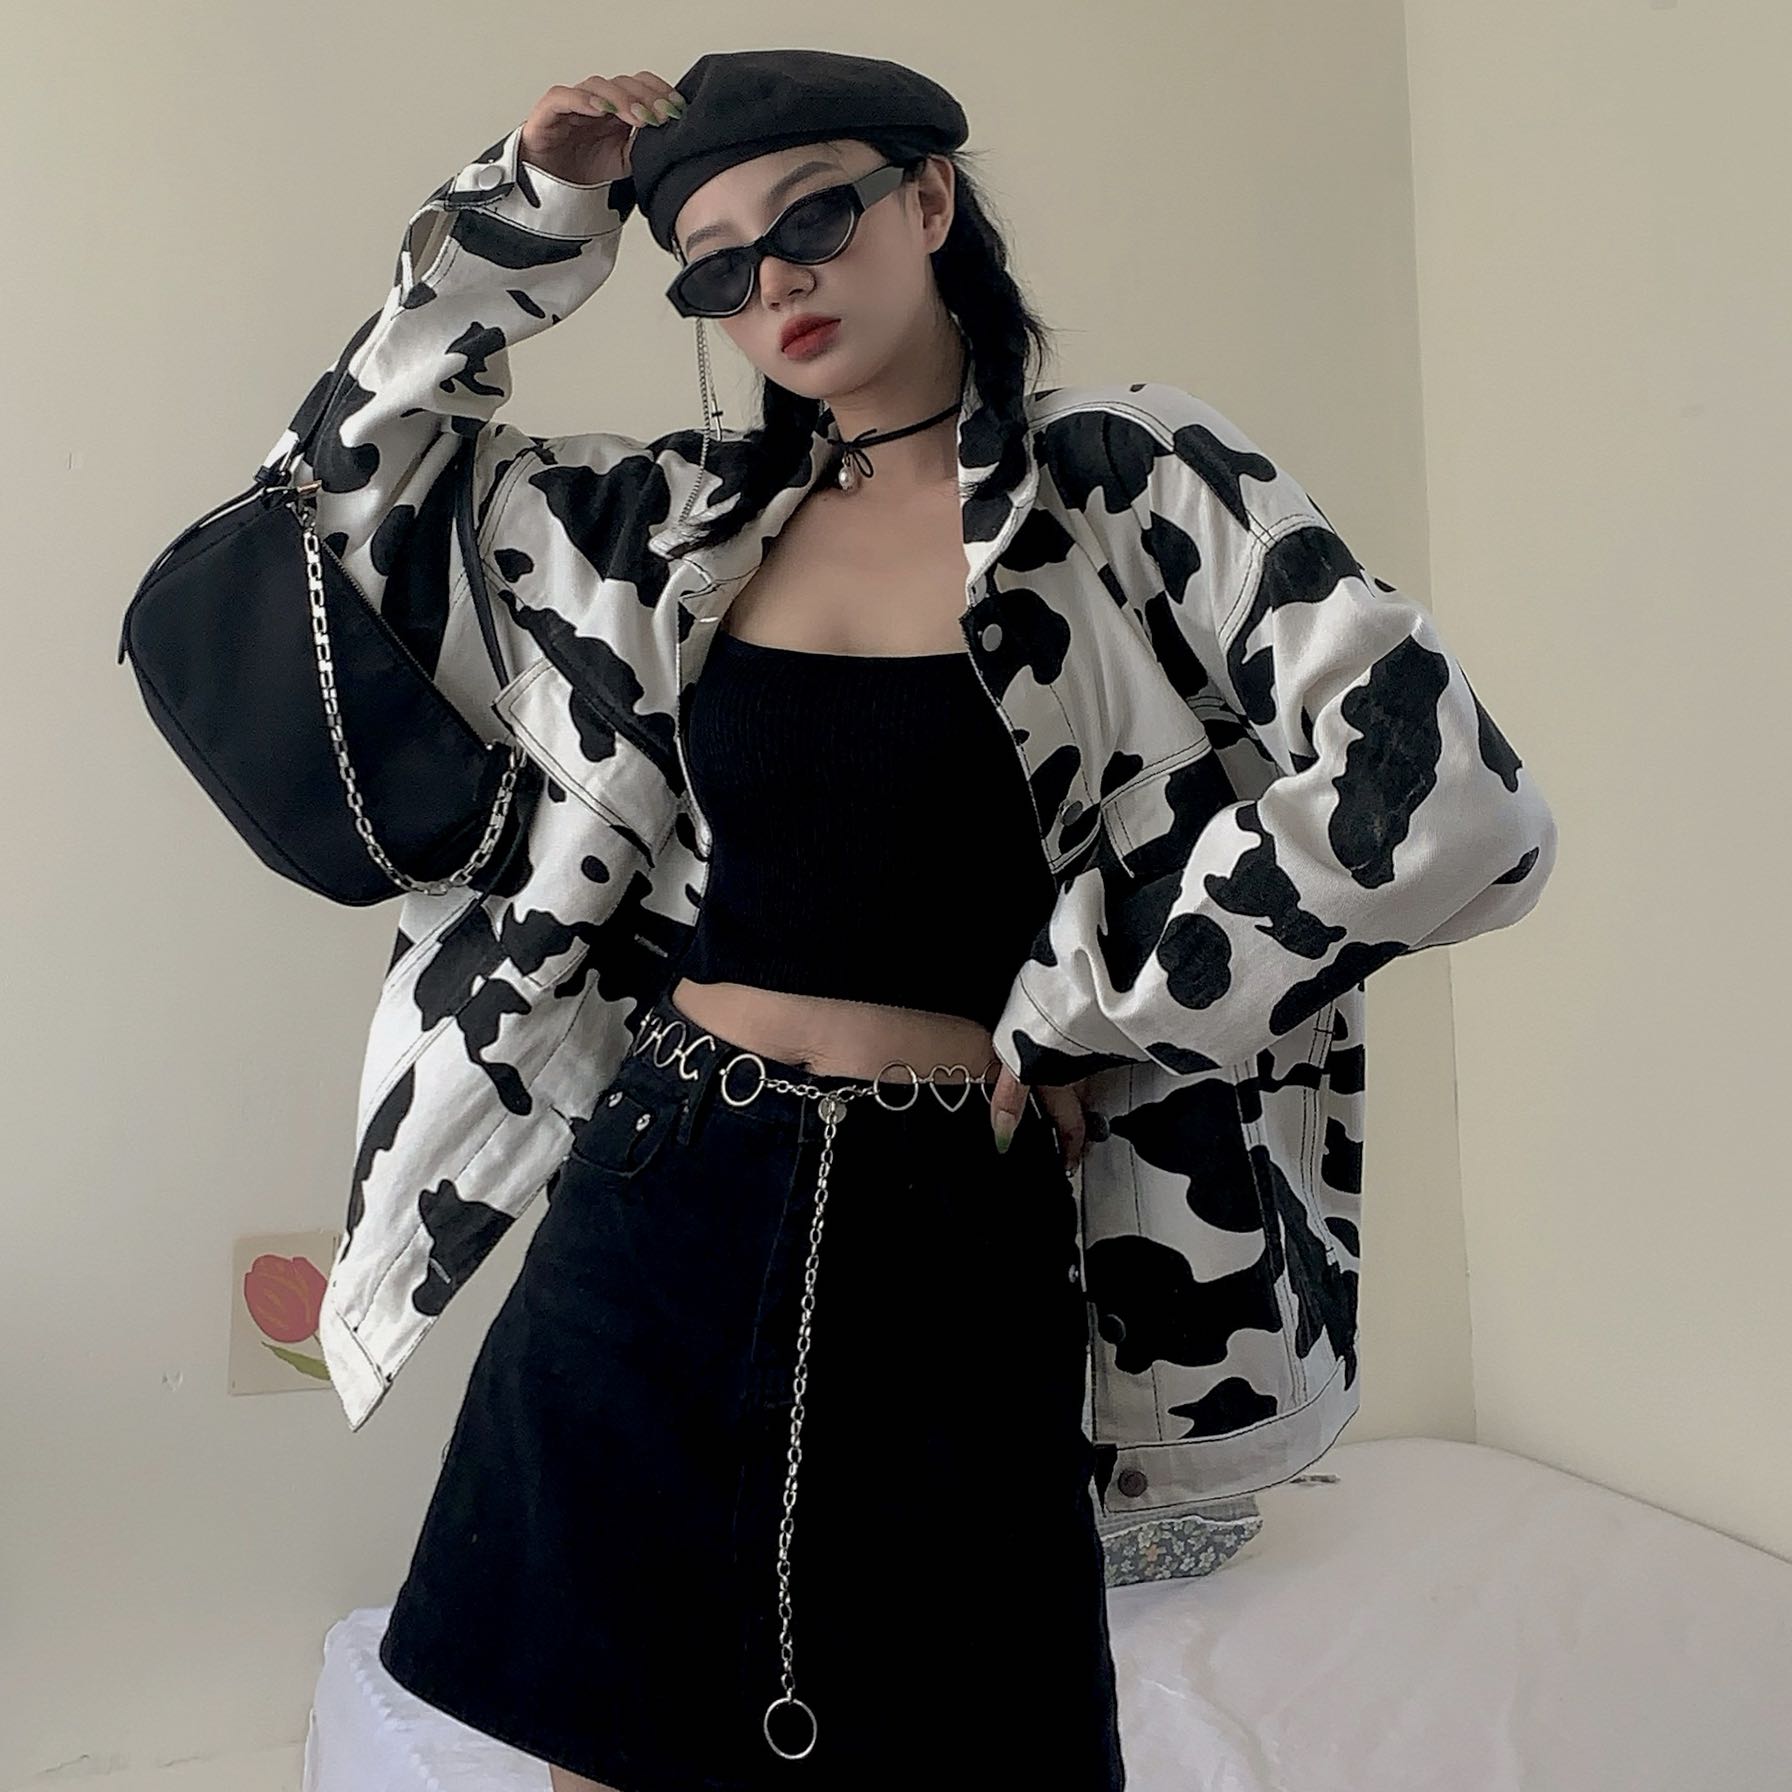 Plus Size Fashion Cow Print Jacket Women 2020 Autumn Coat Casual Long Sleeve Turn Down Collar 2 - The Cow Print